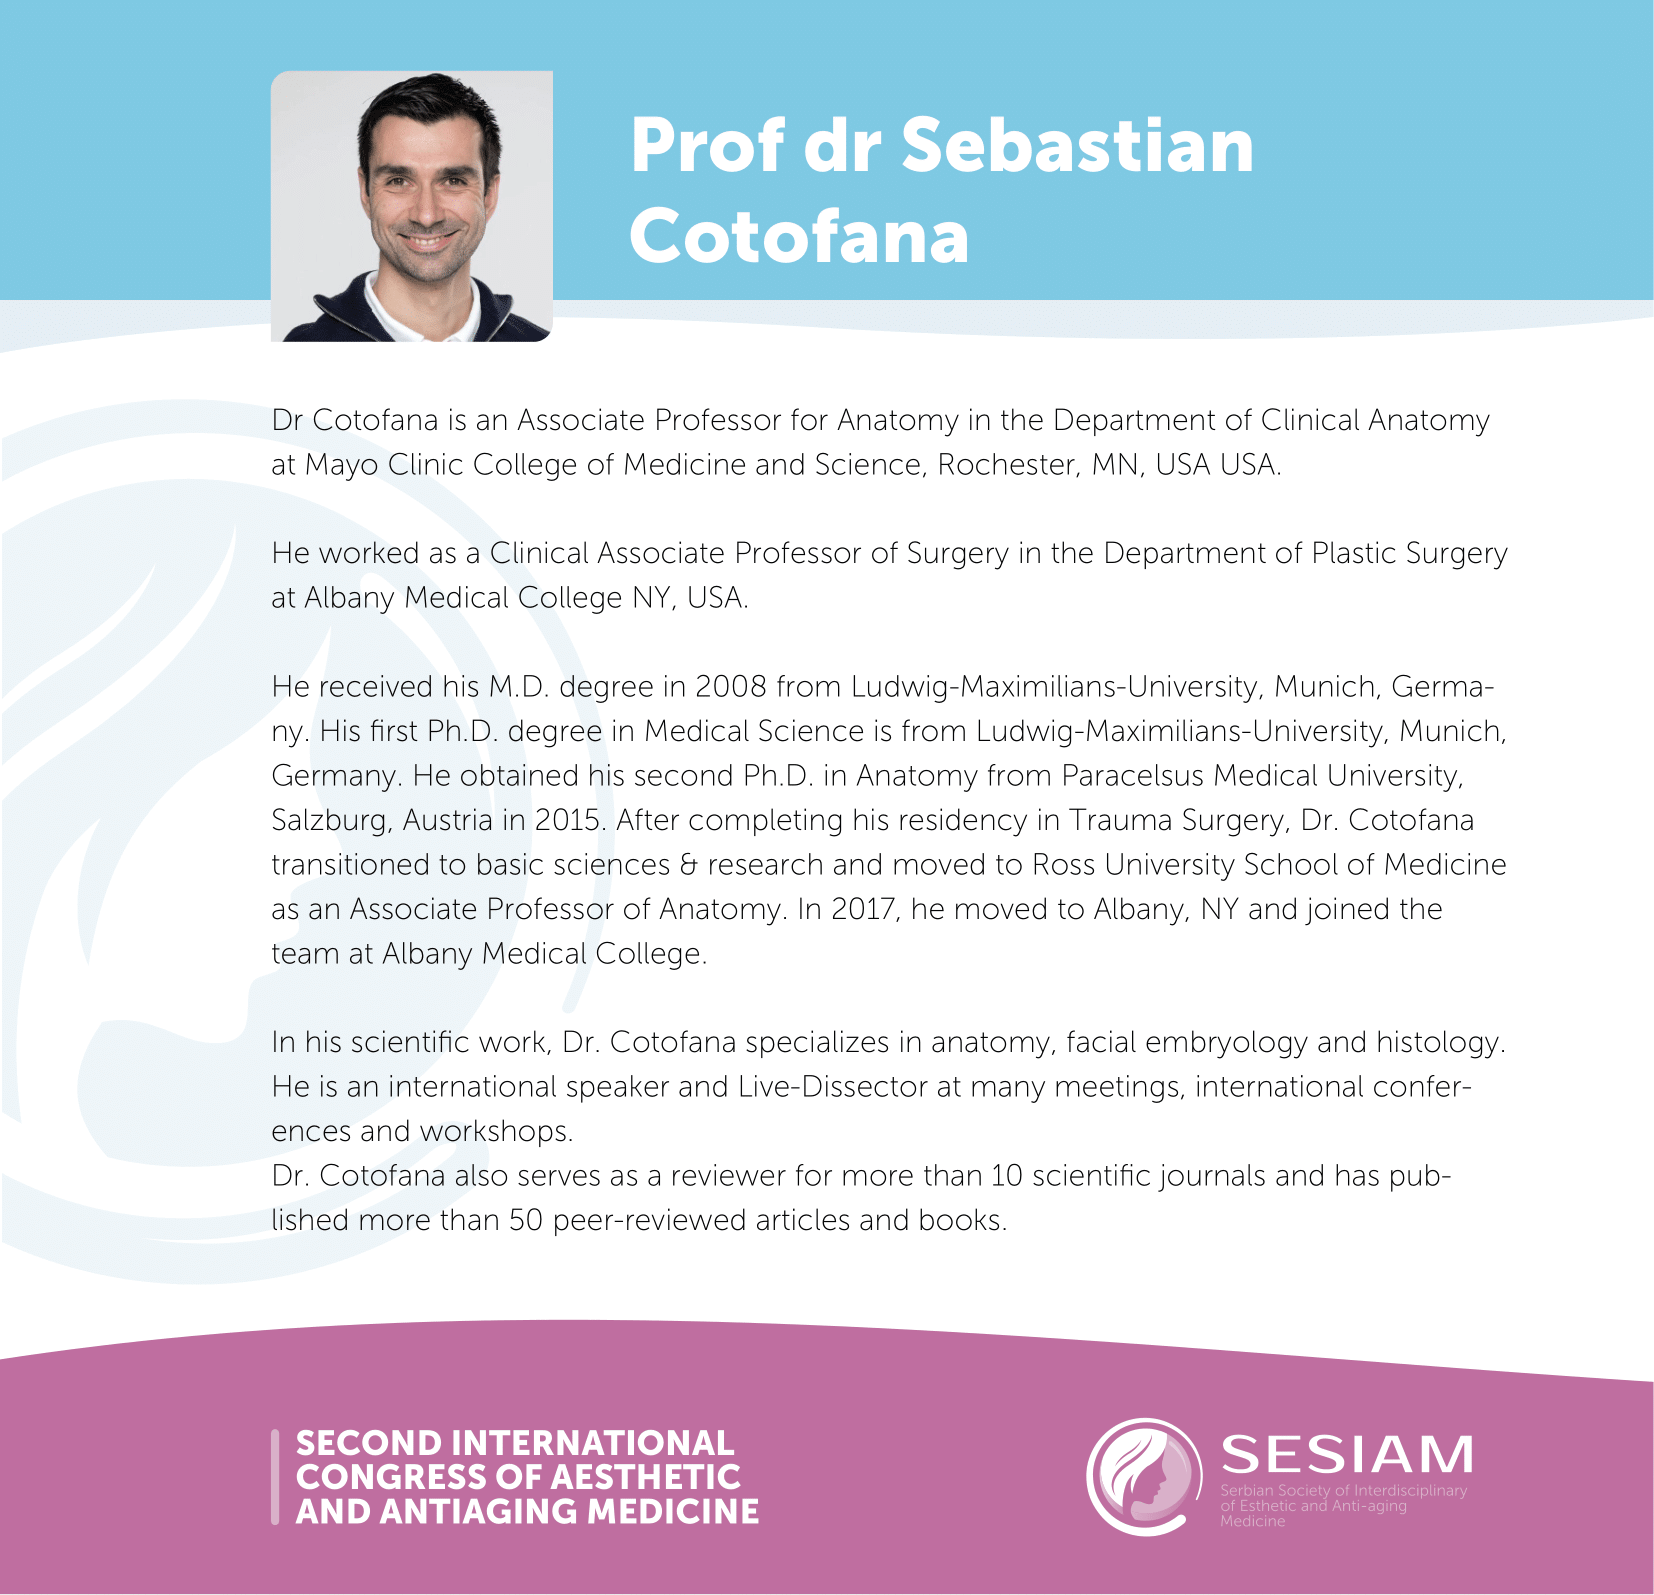 Prof dr Sebastian Cotofana